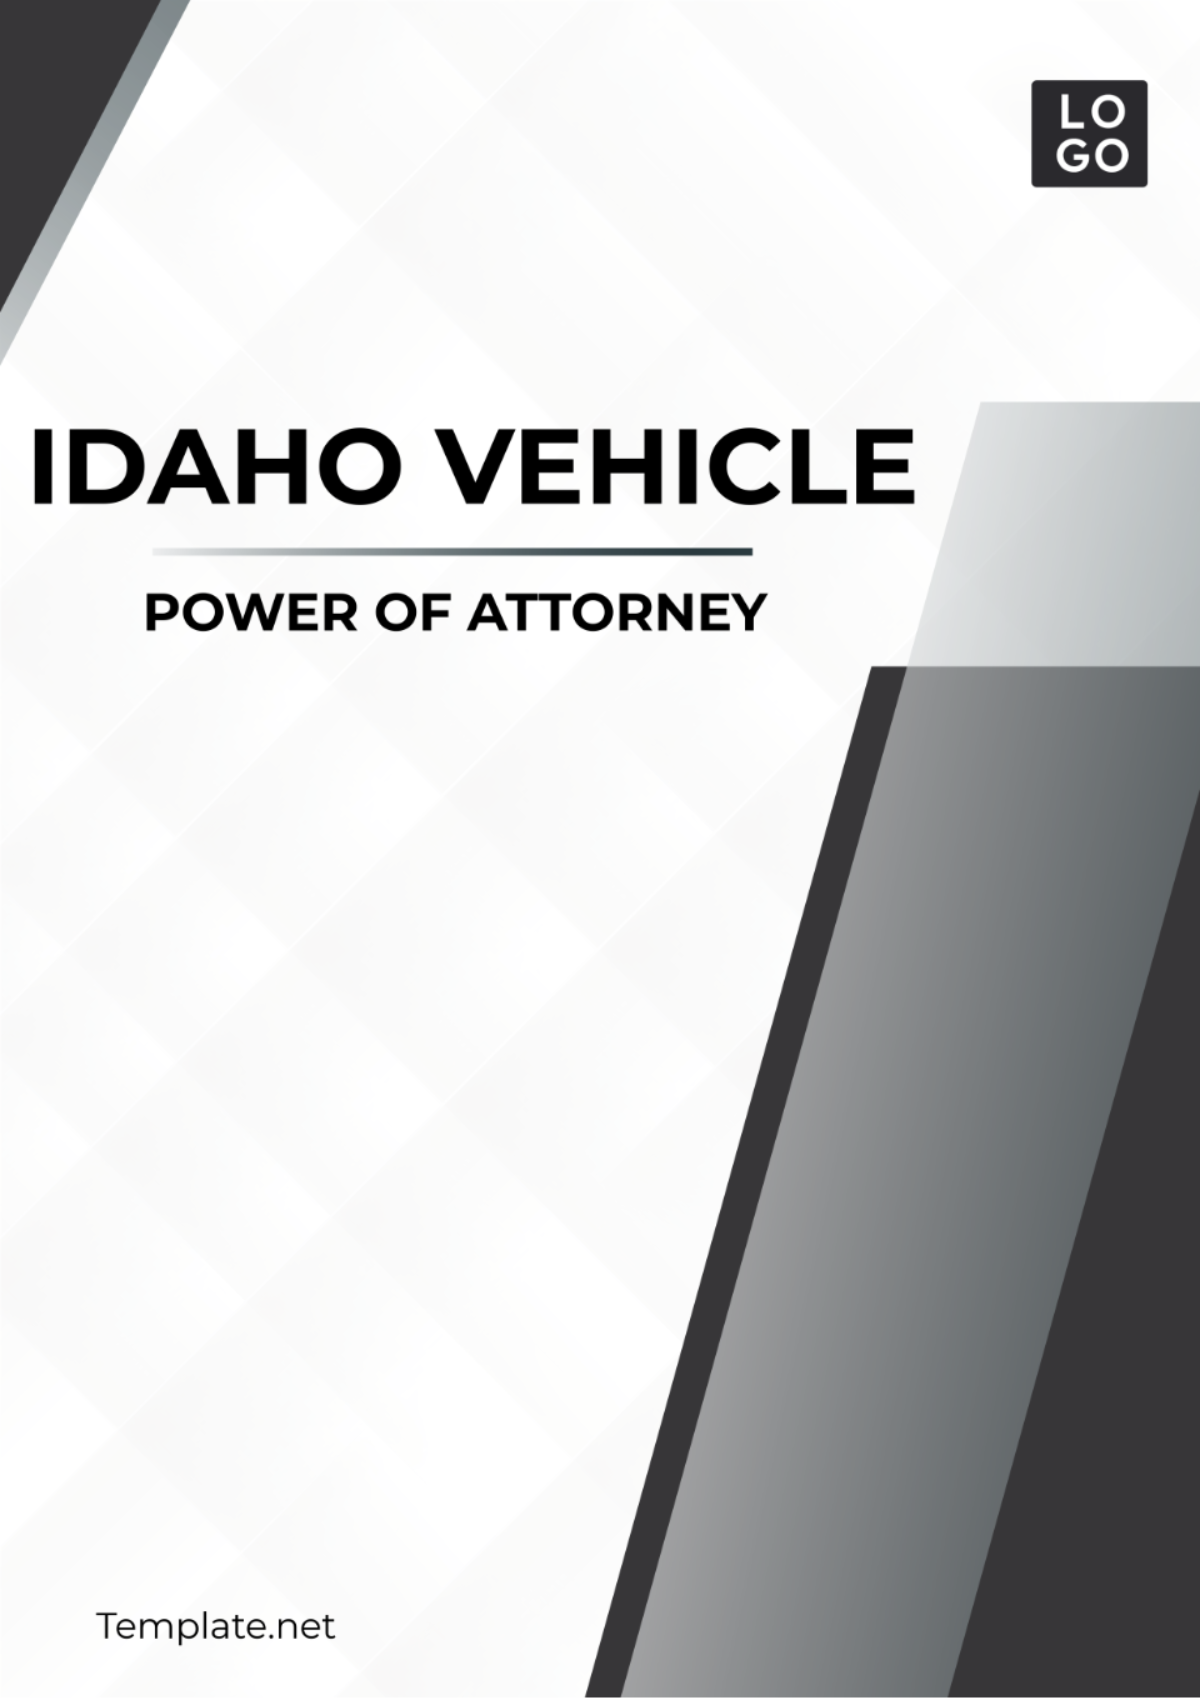 Idaho Vehicle Power of Attorney Template